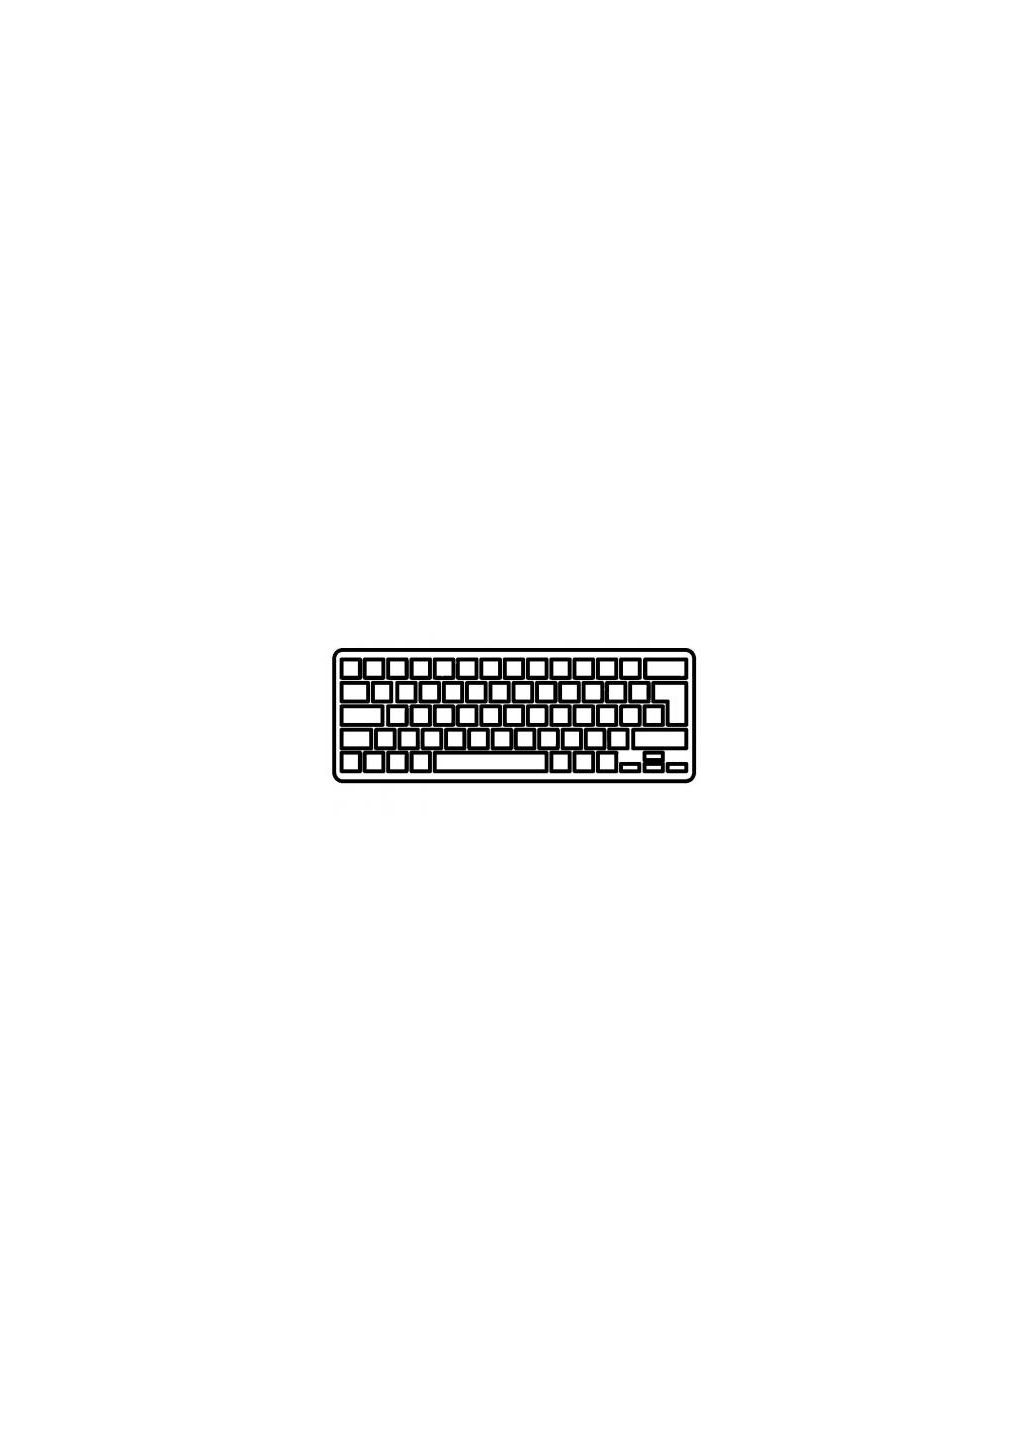 Клавиатура ноутбука Satellite L40A series черная с черной рамкой UA (A43784) Toshiba satellite l40-a series черная с черной рамкой ua (276707419)